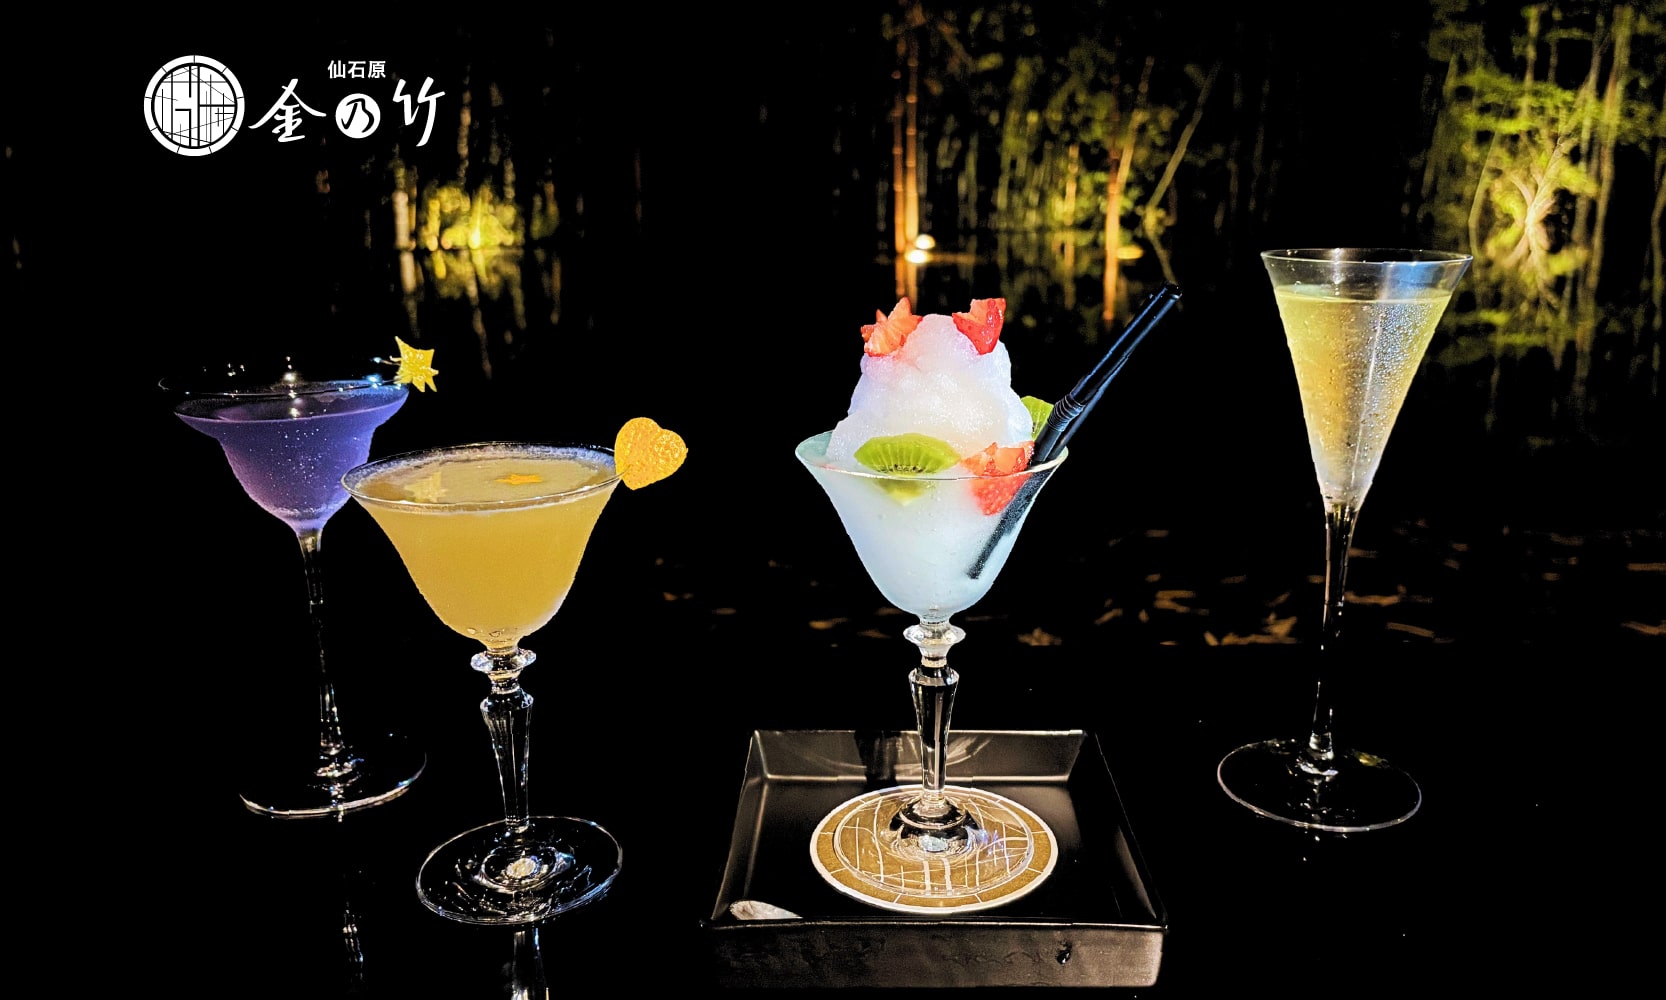 Kinnotake Sengokuhara to Offer Limited-Time Kaguya-Hime Themed Cocktails Starting Sunday, July 7